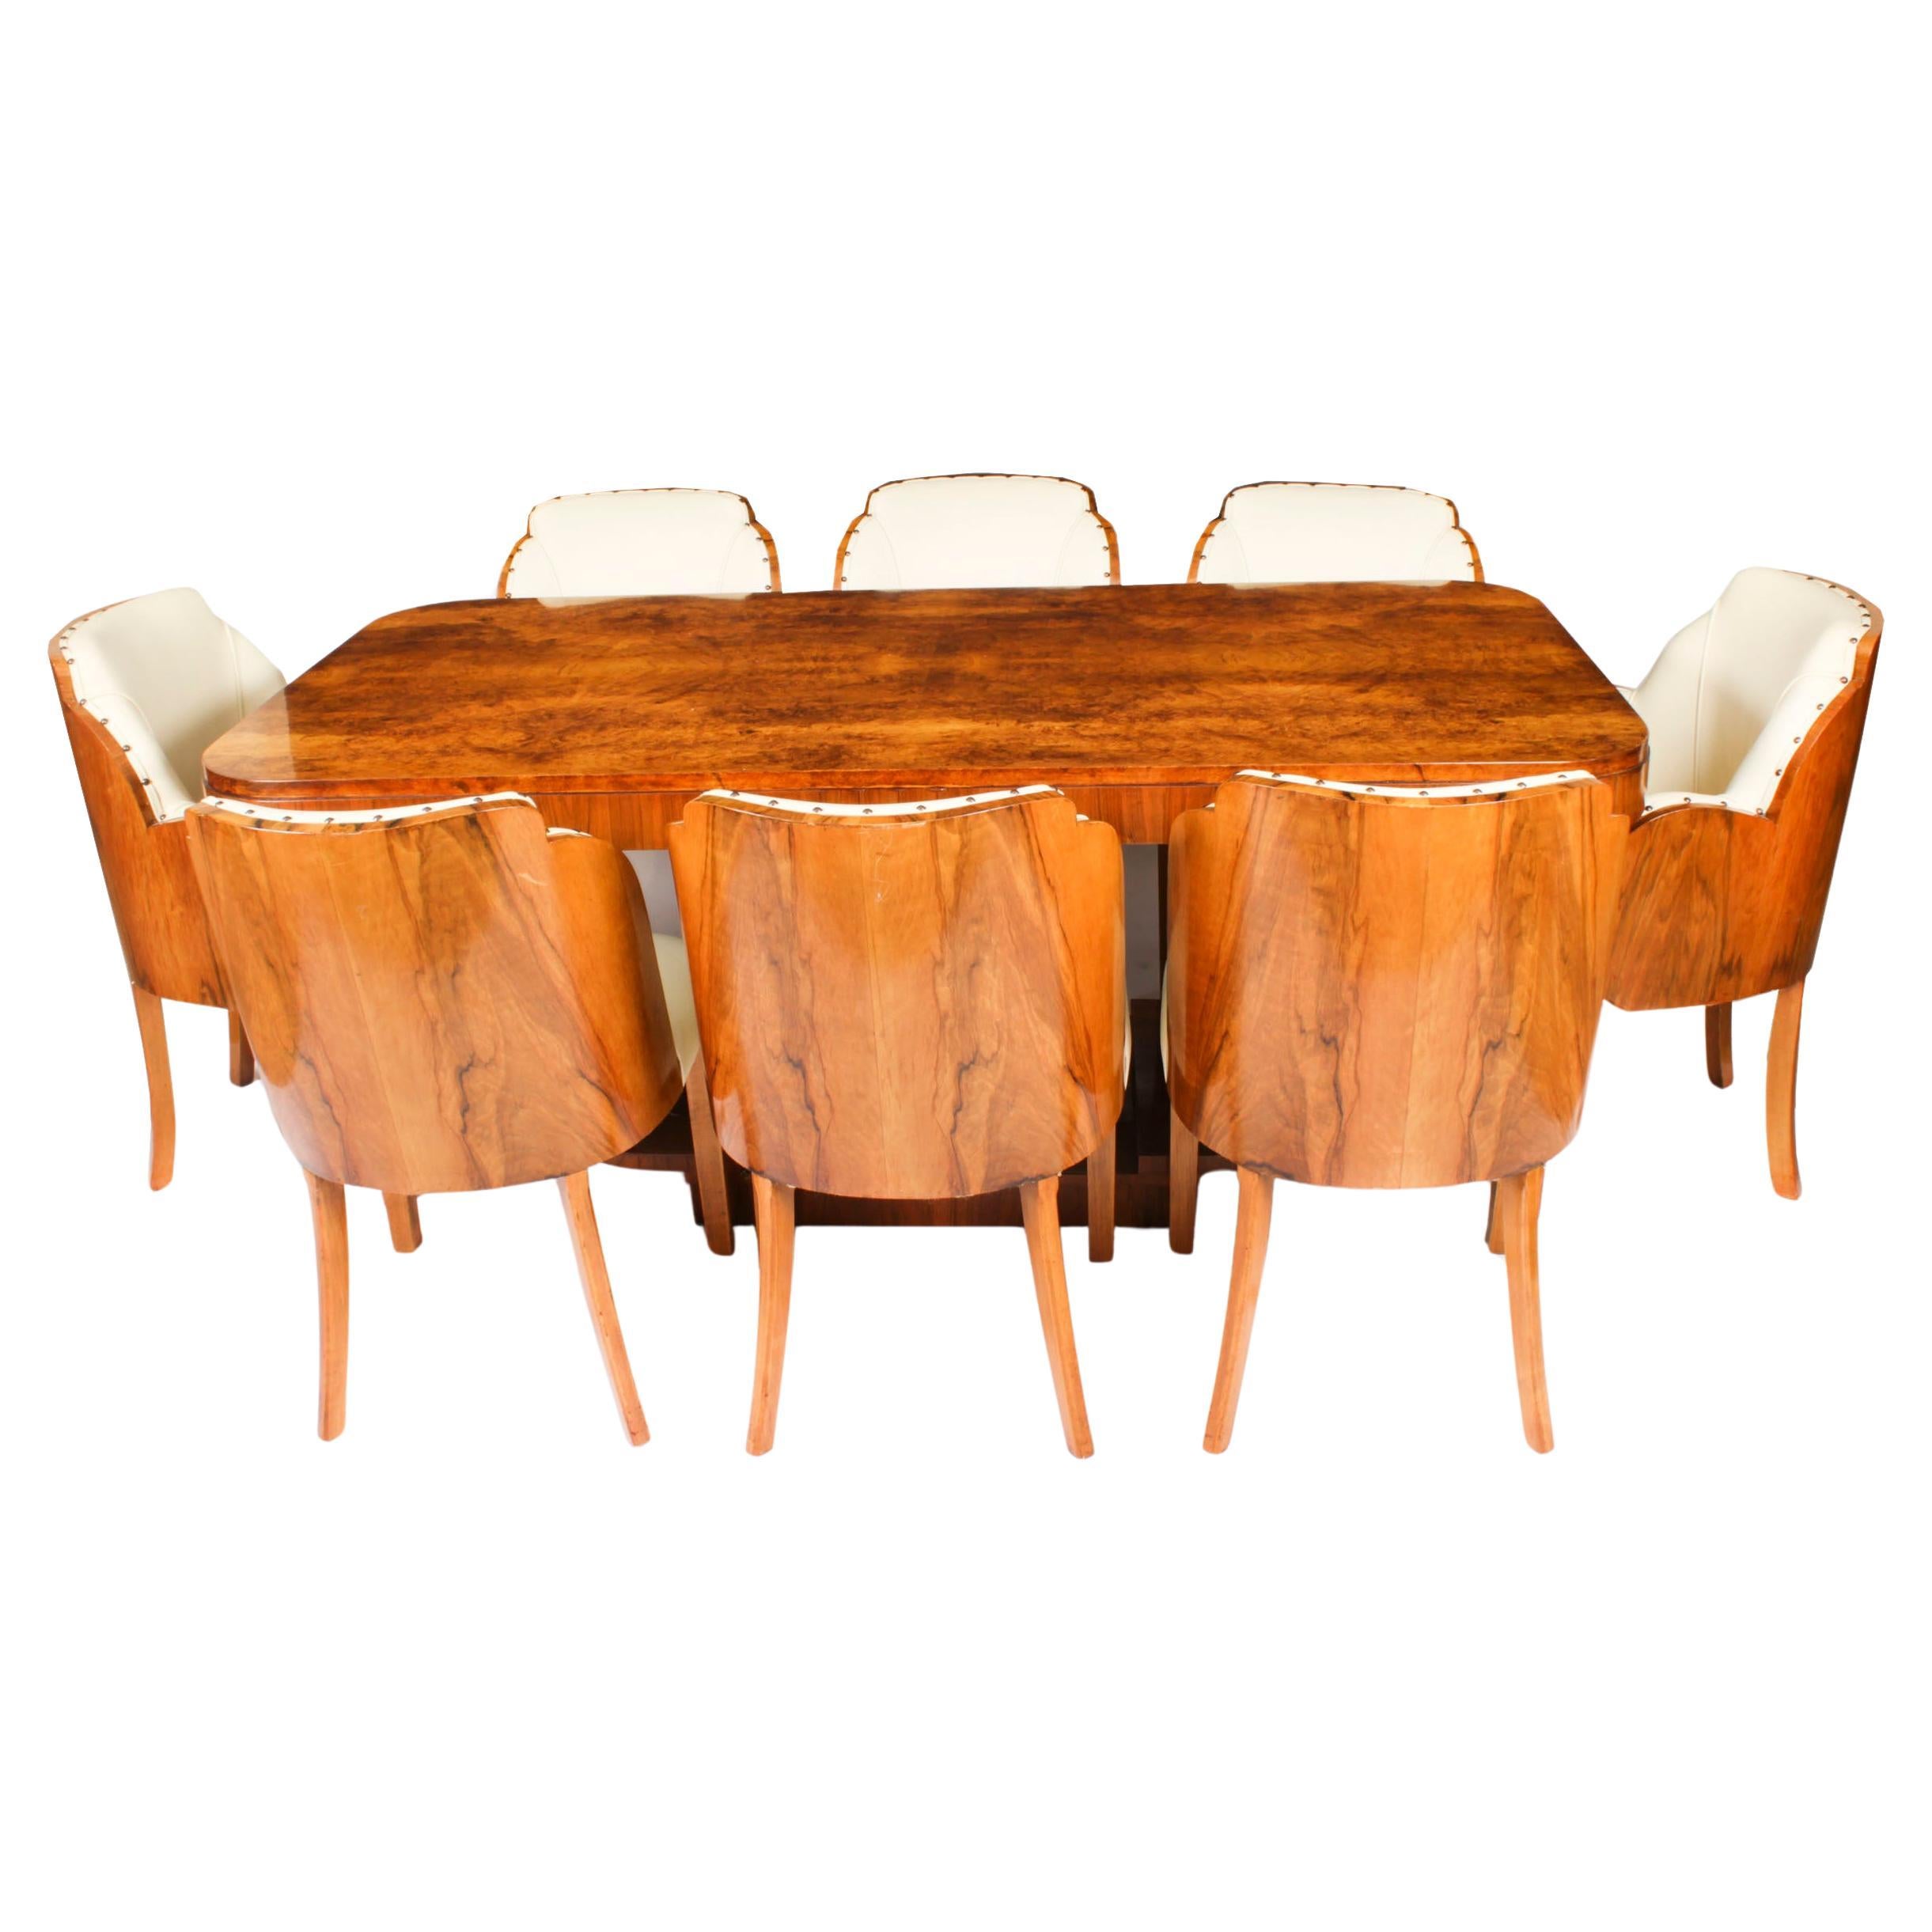 Antique Art Deco Burr Walnut Dining Table & 8 Cloud Back Chairs C1920 For Sale